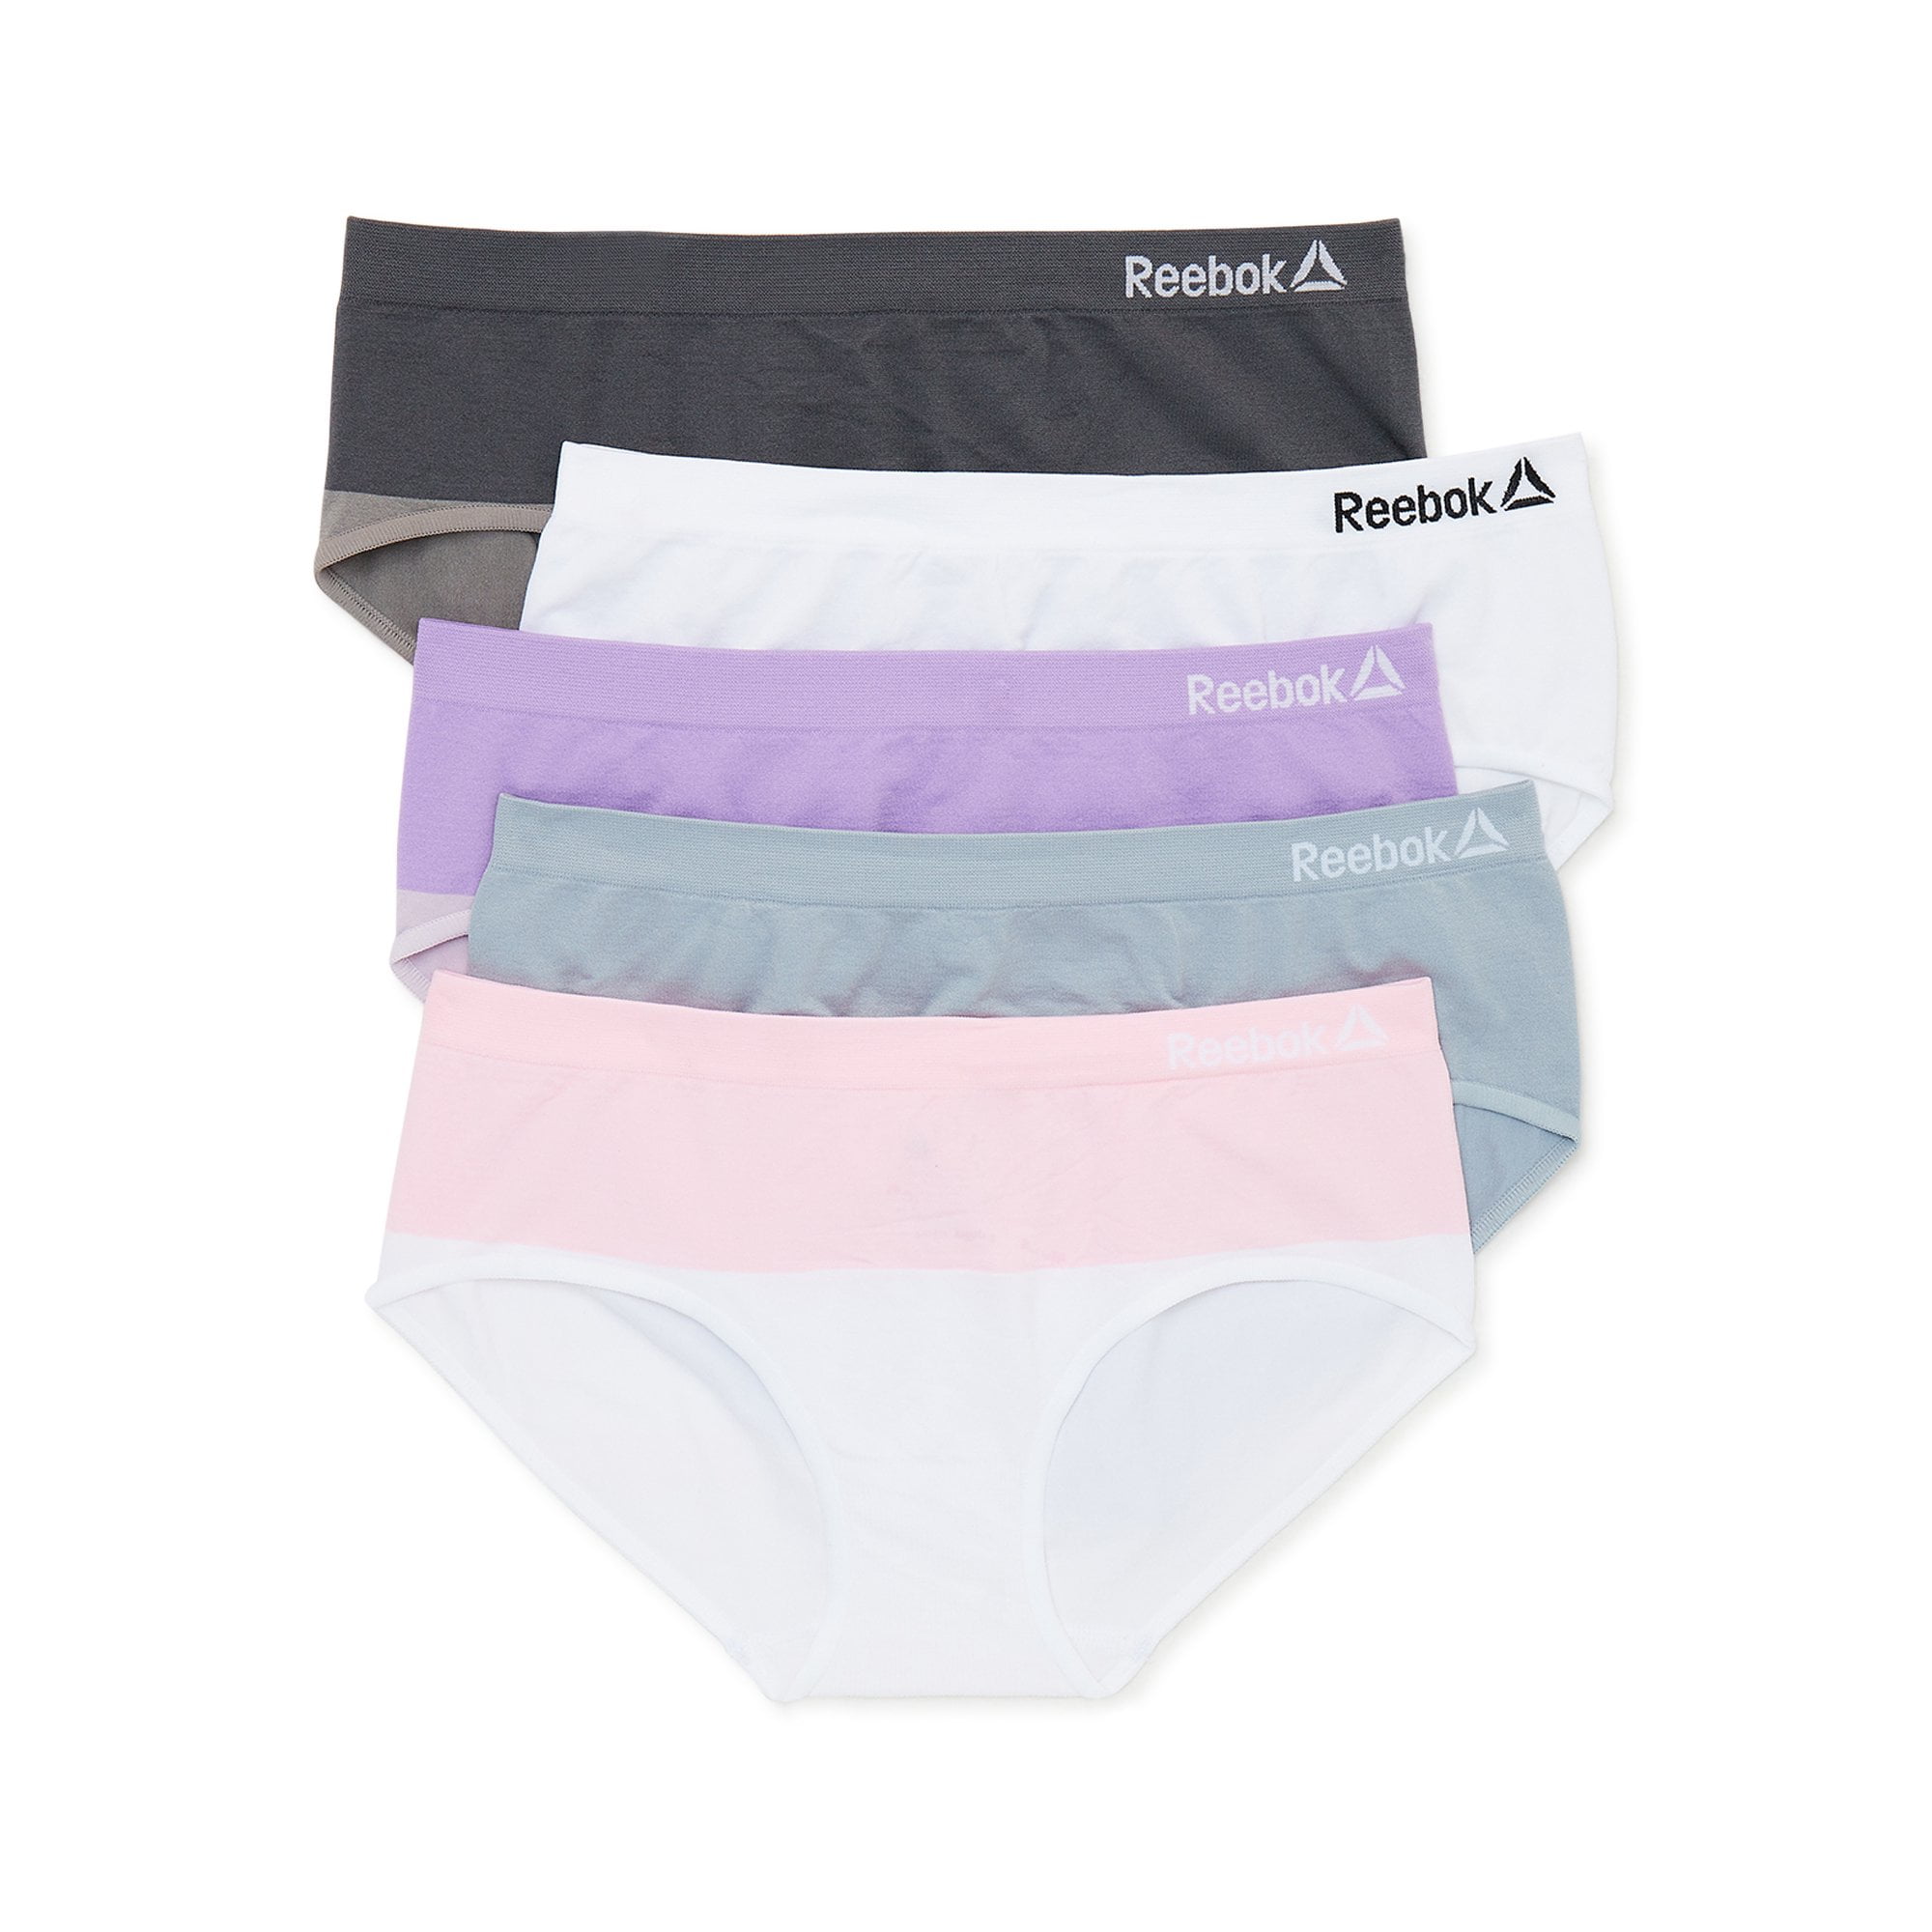 Reebok Women’s Underwear – Seamless High Waist Brief Panties (10 Pack),  Size Large, Navy/Grey/White/Pink